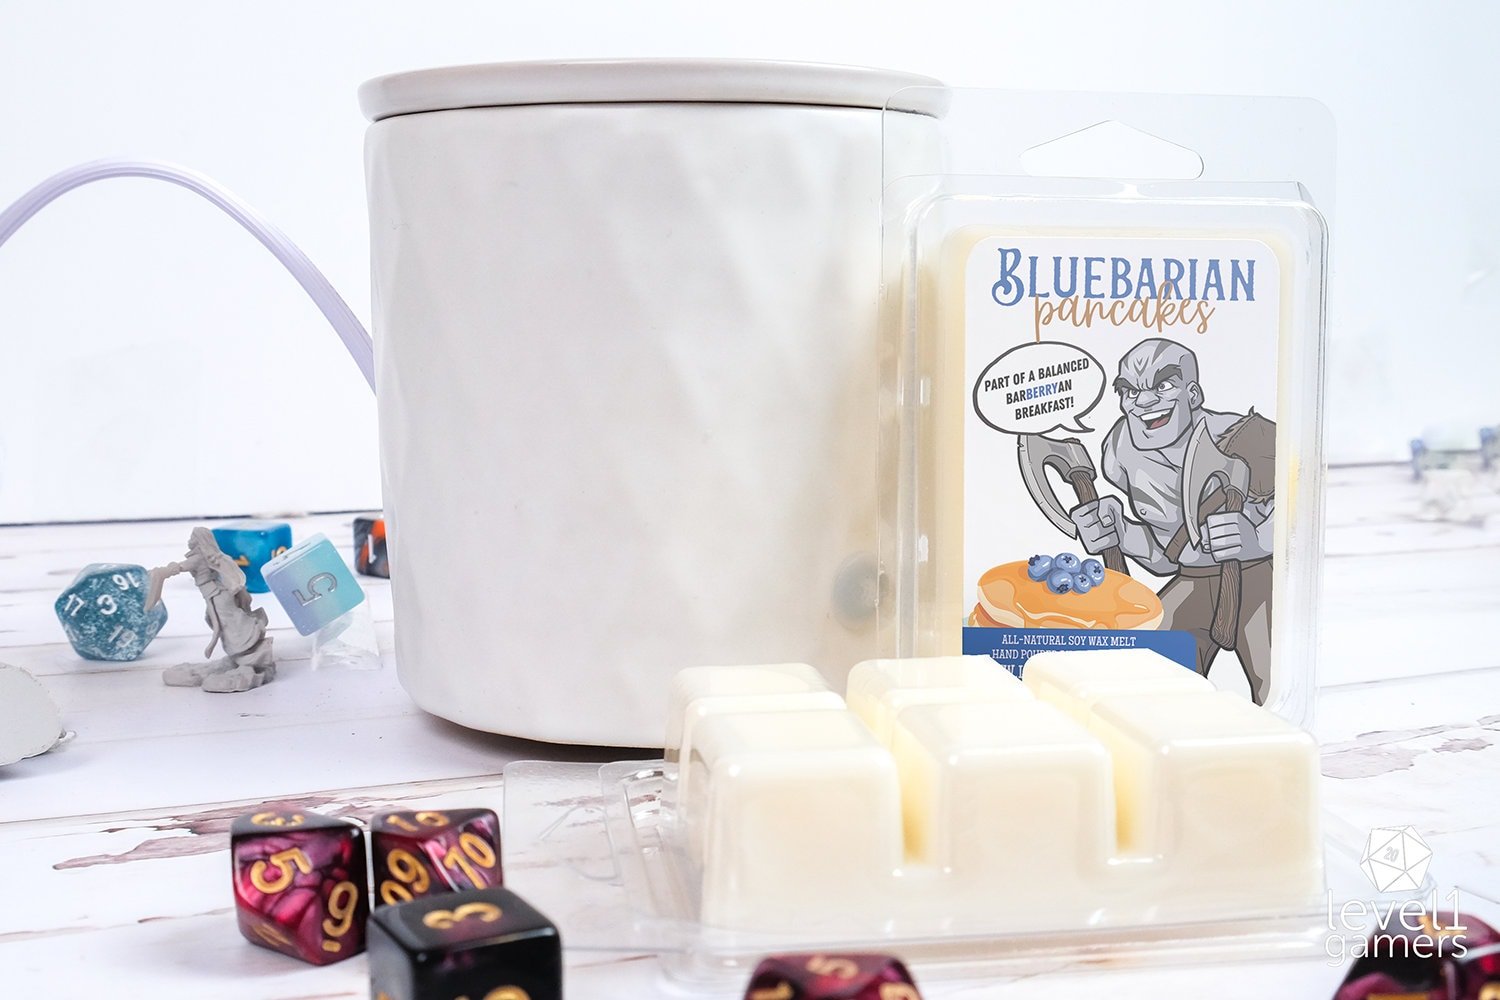 Bluebarian Pancakes Wax Melts  Level 1 Gamers   